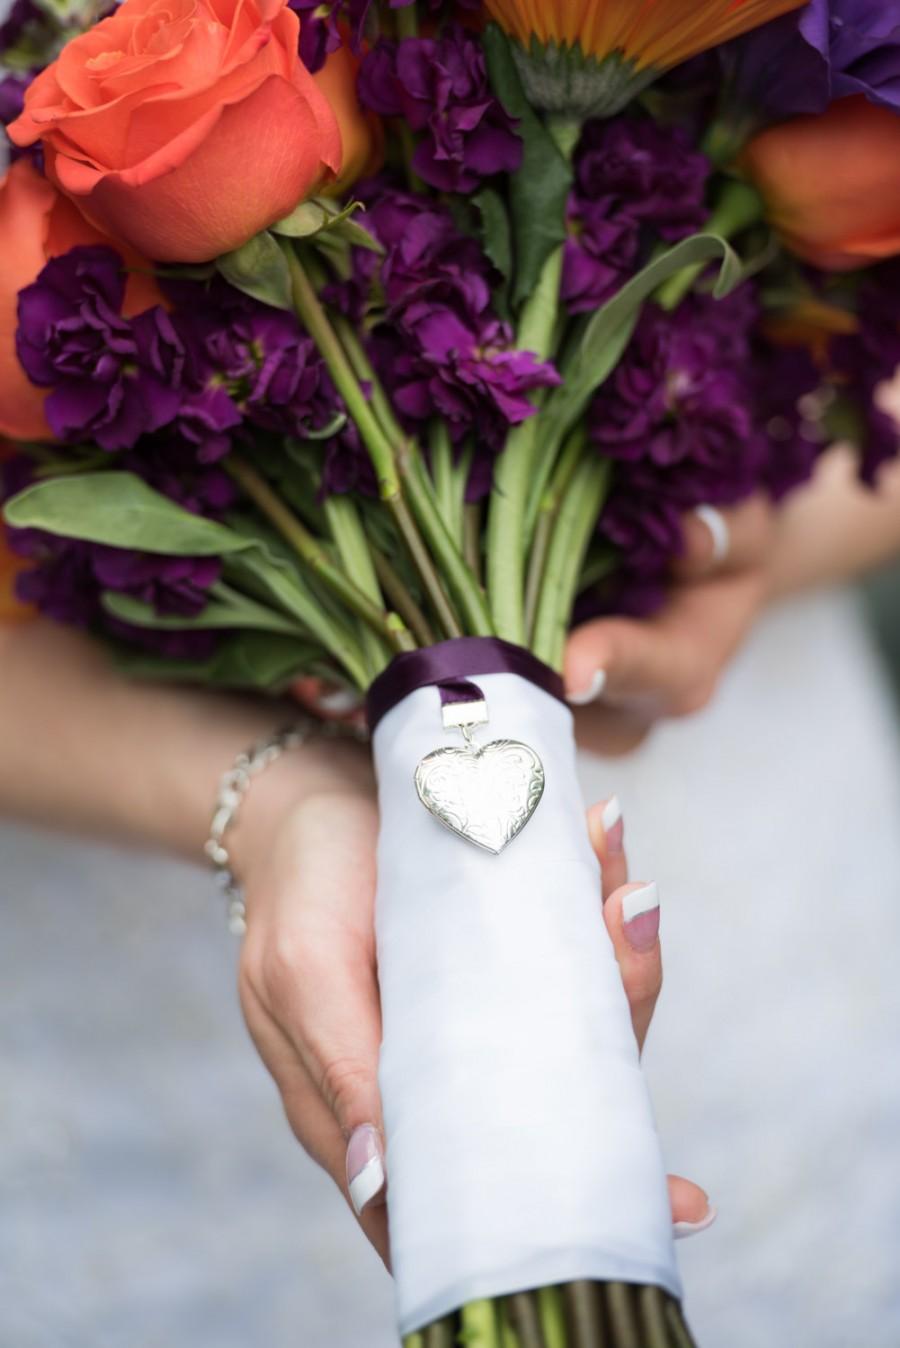 زفاف - Wedding Bouquet Heart Locket Memory Photo Frame.  Bridal Charm,  Bride Keepsake